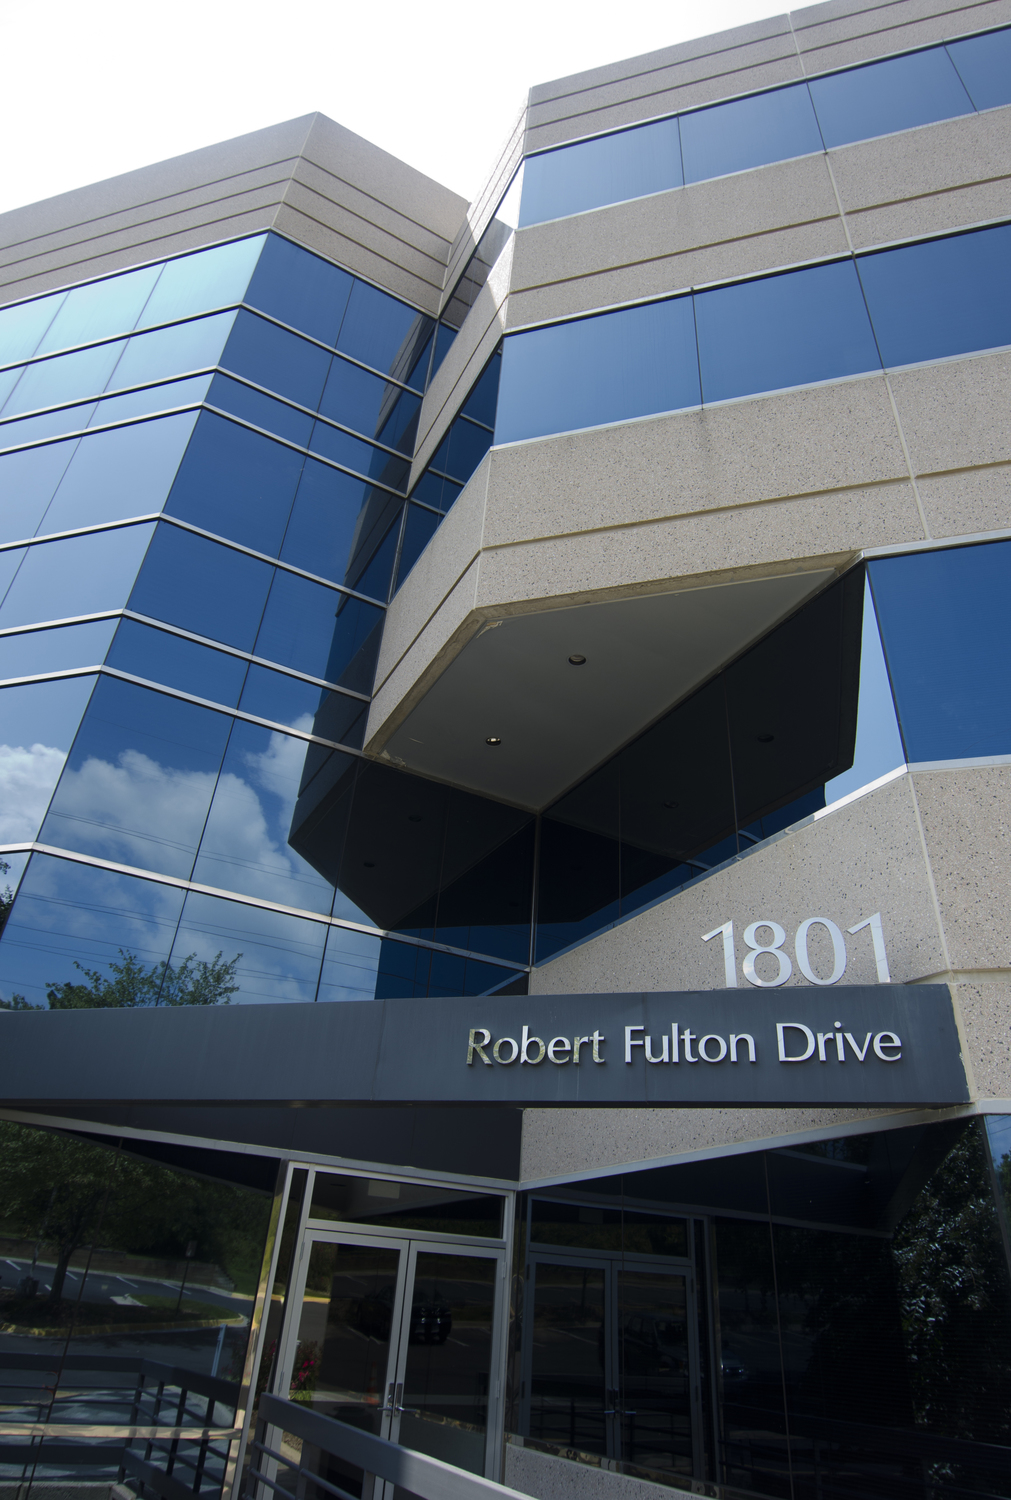 Gallery Photo of 1801 Robert Fulton Drive, Reston, VA 20191